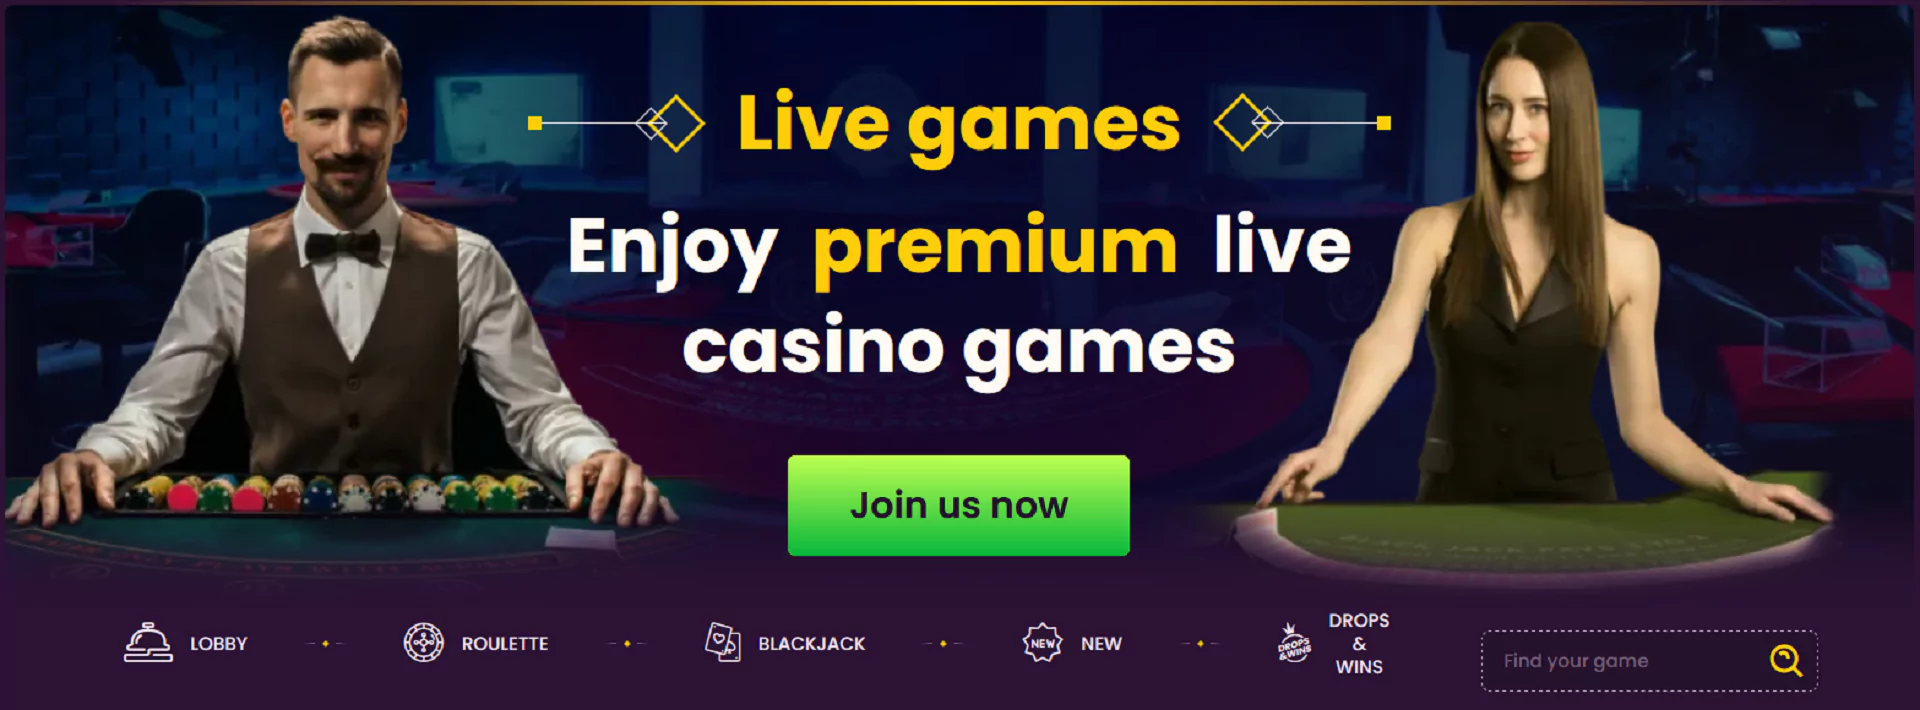 Screenshot of live games from Bizzo Casino website